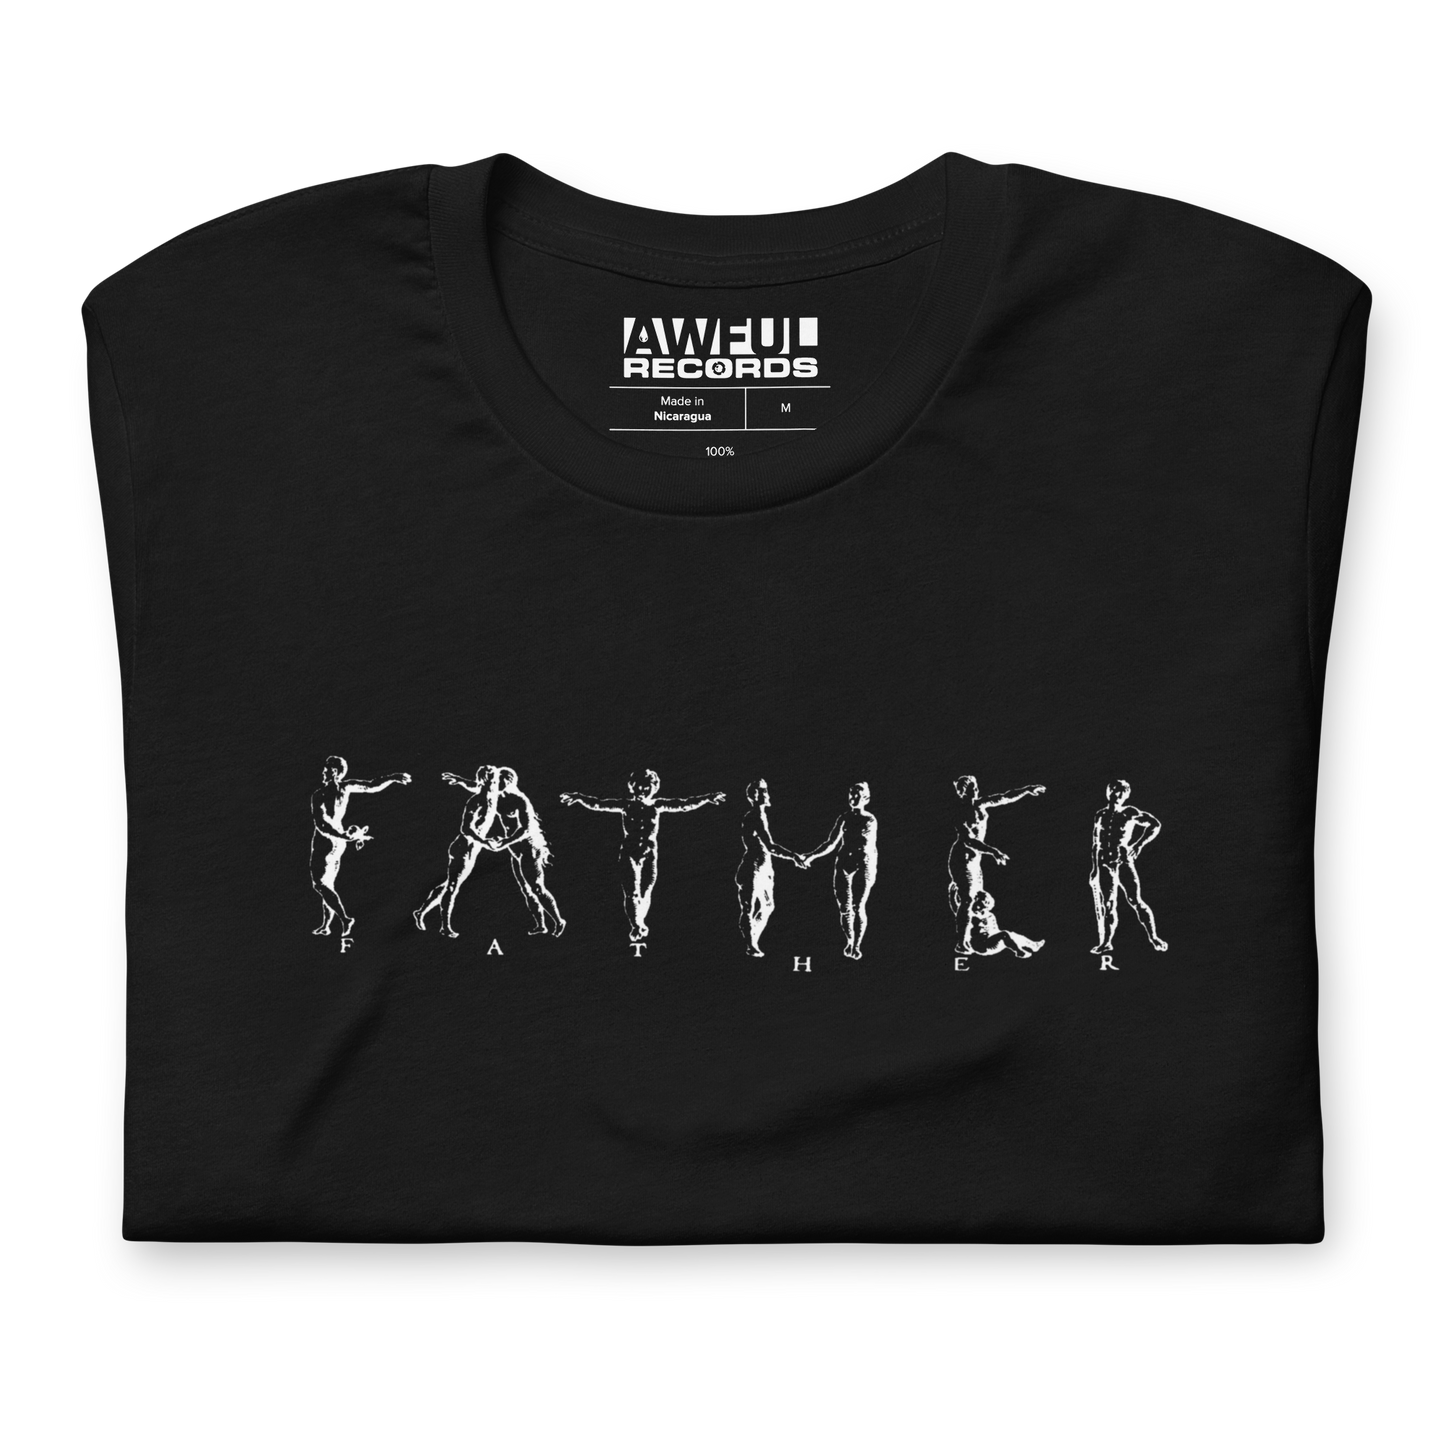 Father's Human Alphabet T-Shirt